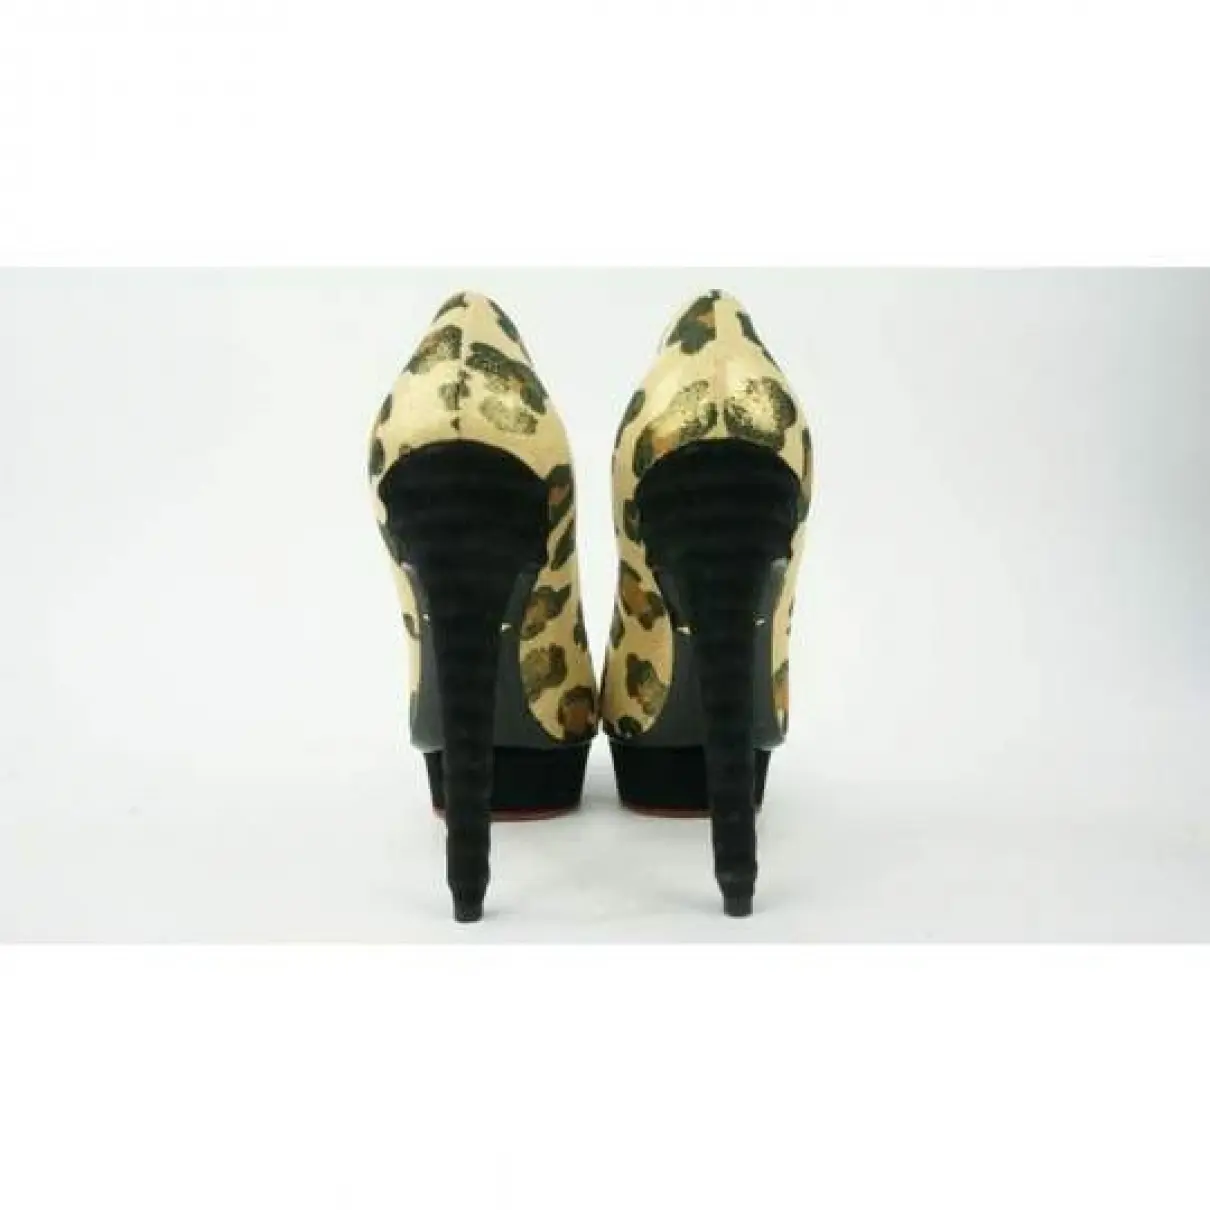 Buy Charlotte Olympia Leather heels online